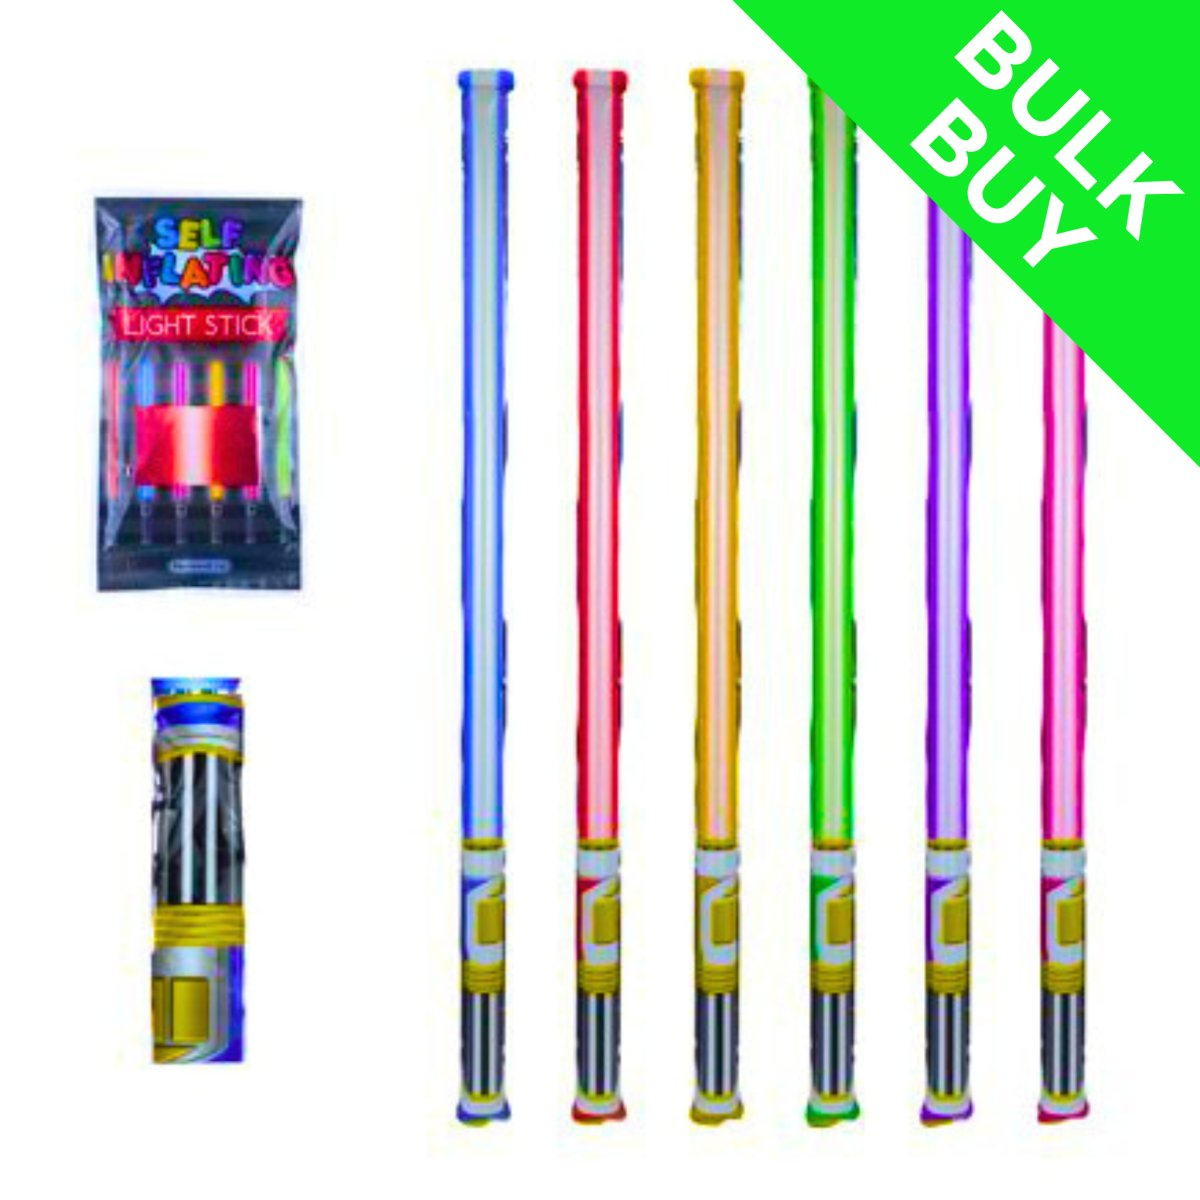 Self Inflating Light Sticks Bulk Buy (Choose Quantity) - Kids Party Craft